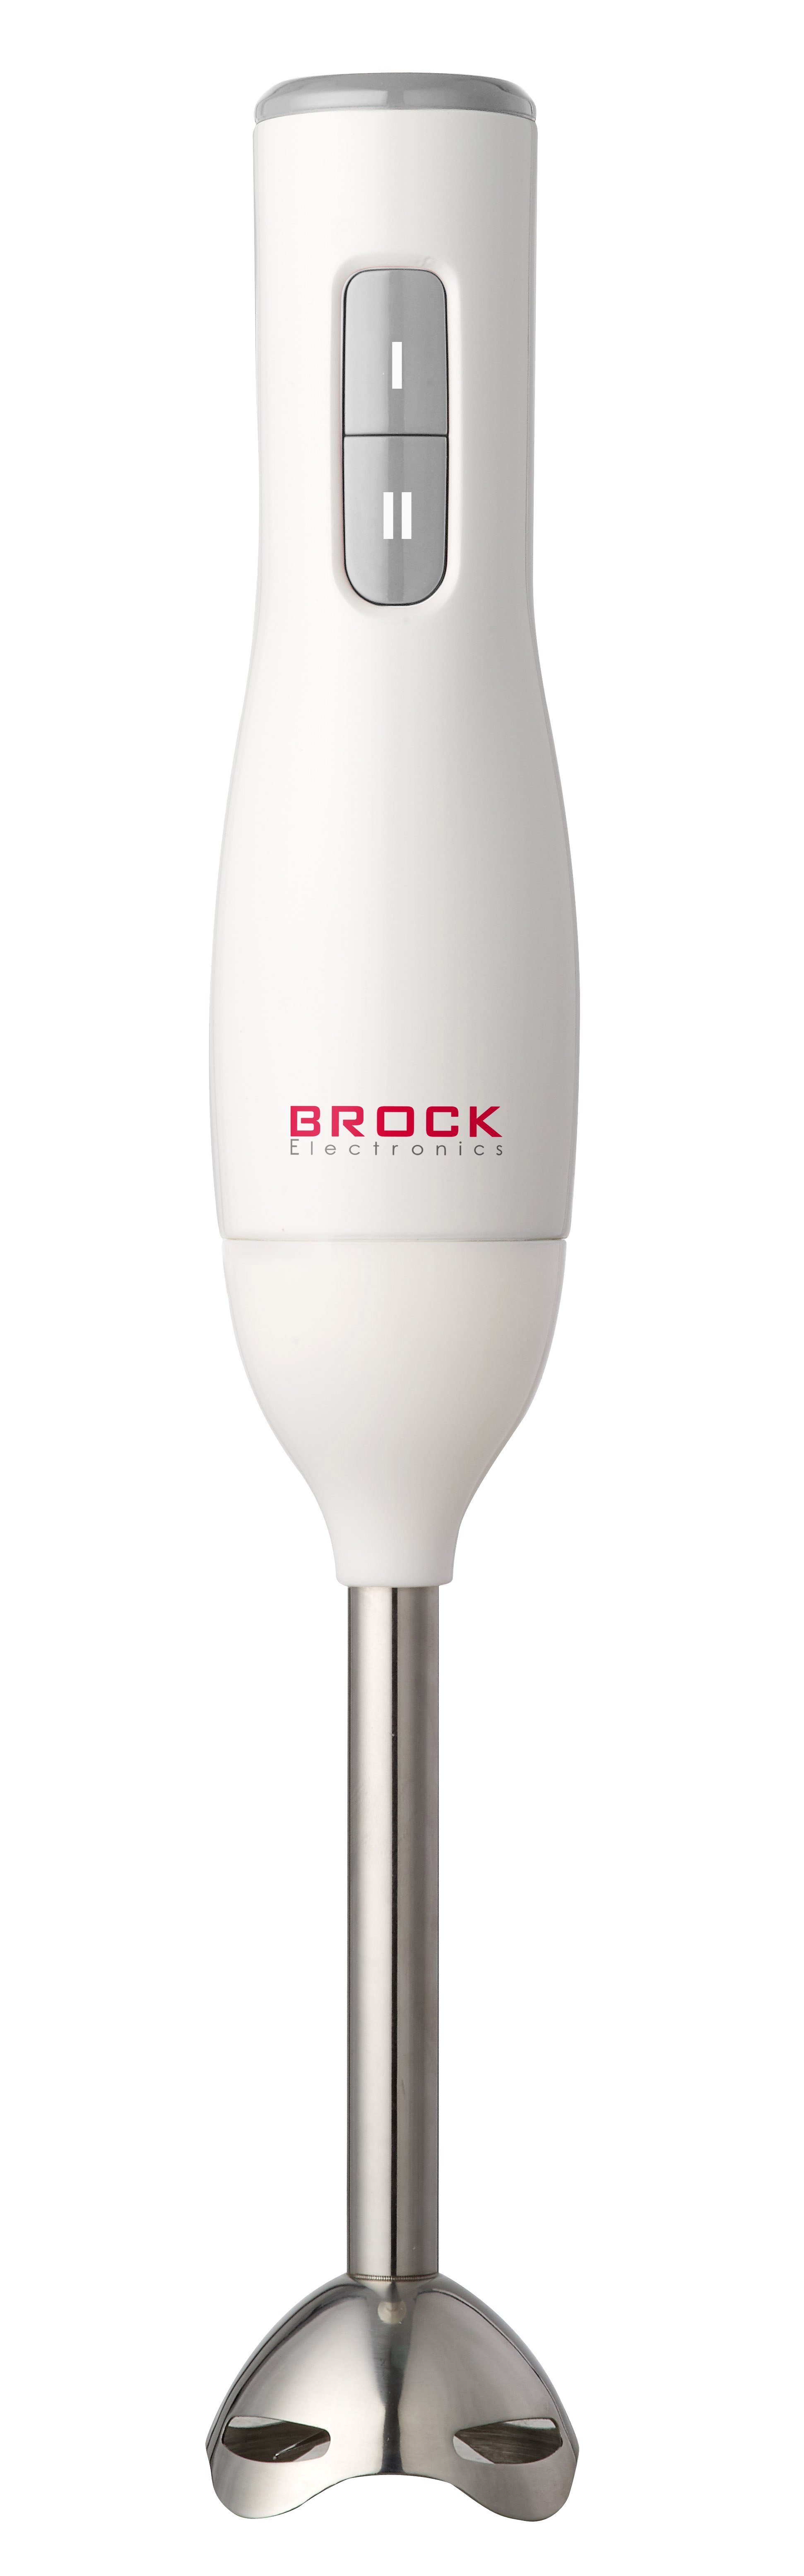 Brock HB 5001 WH